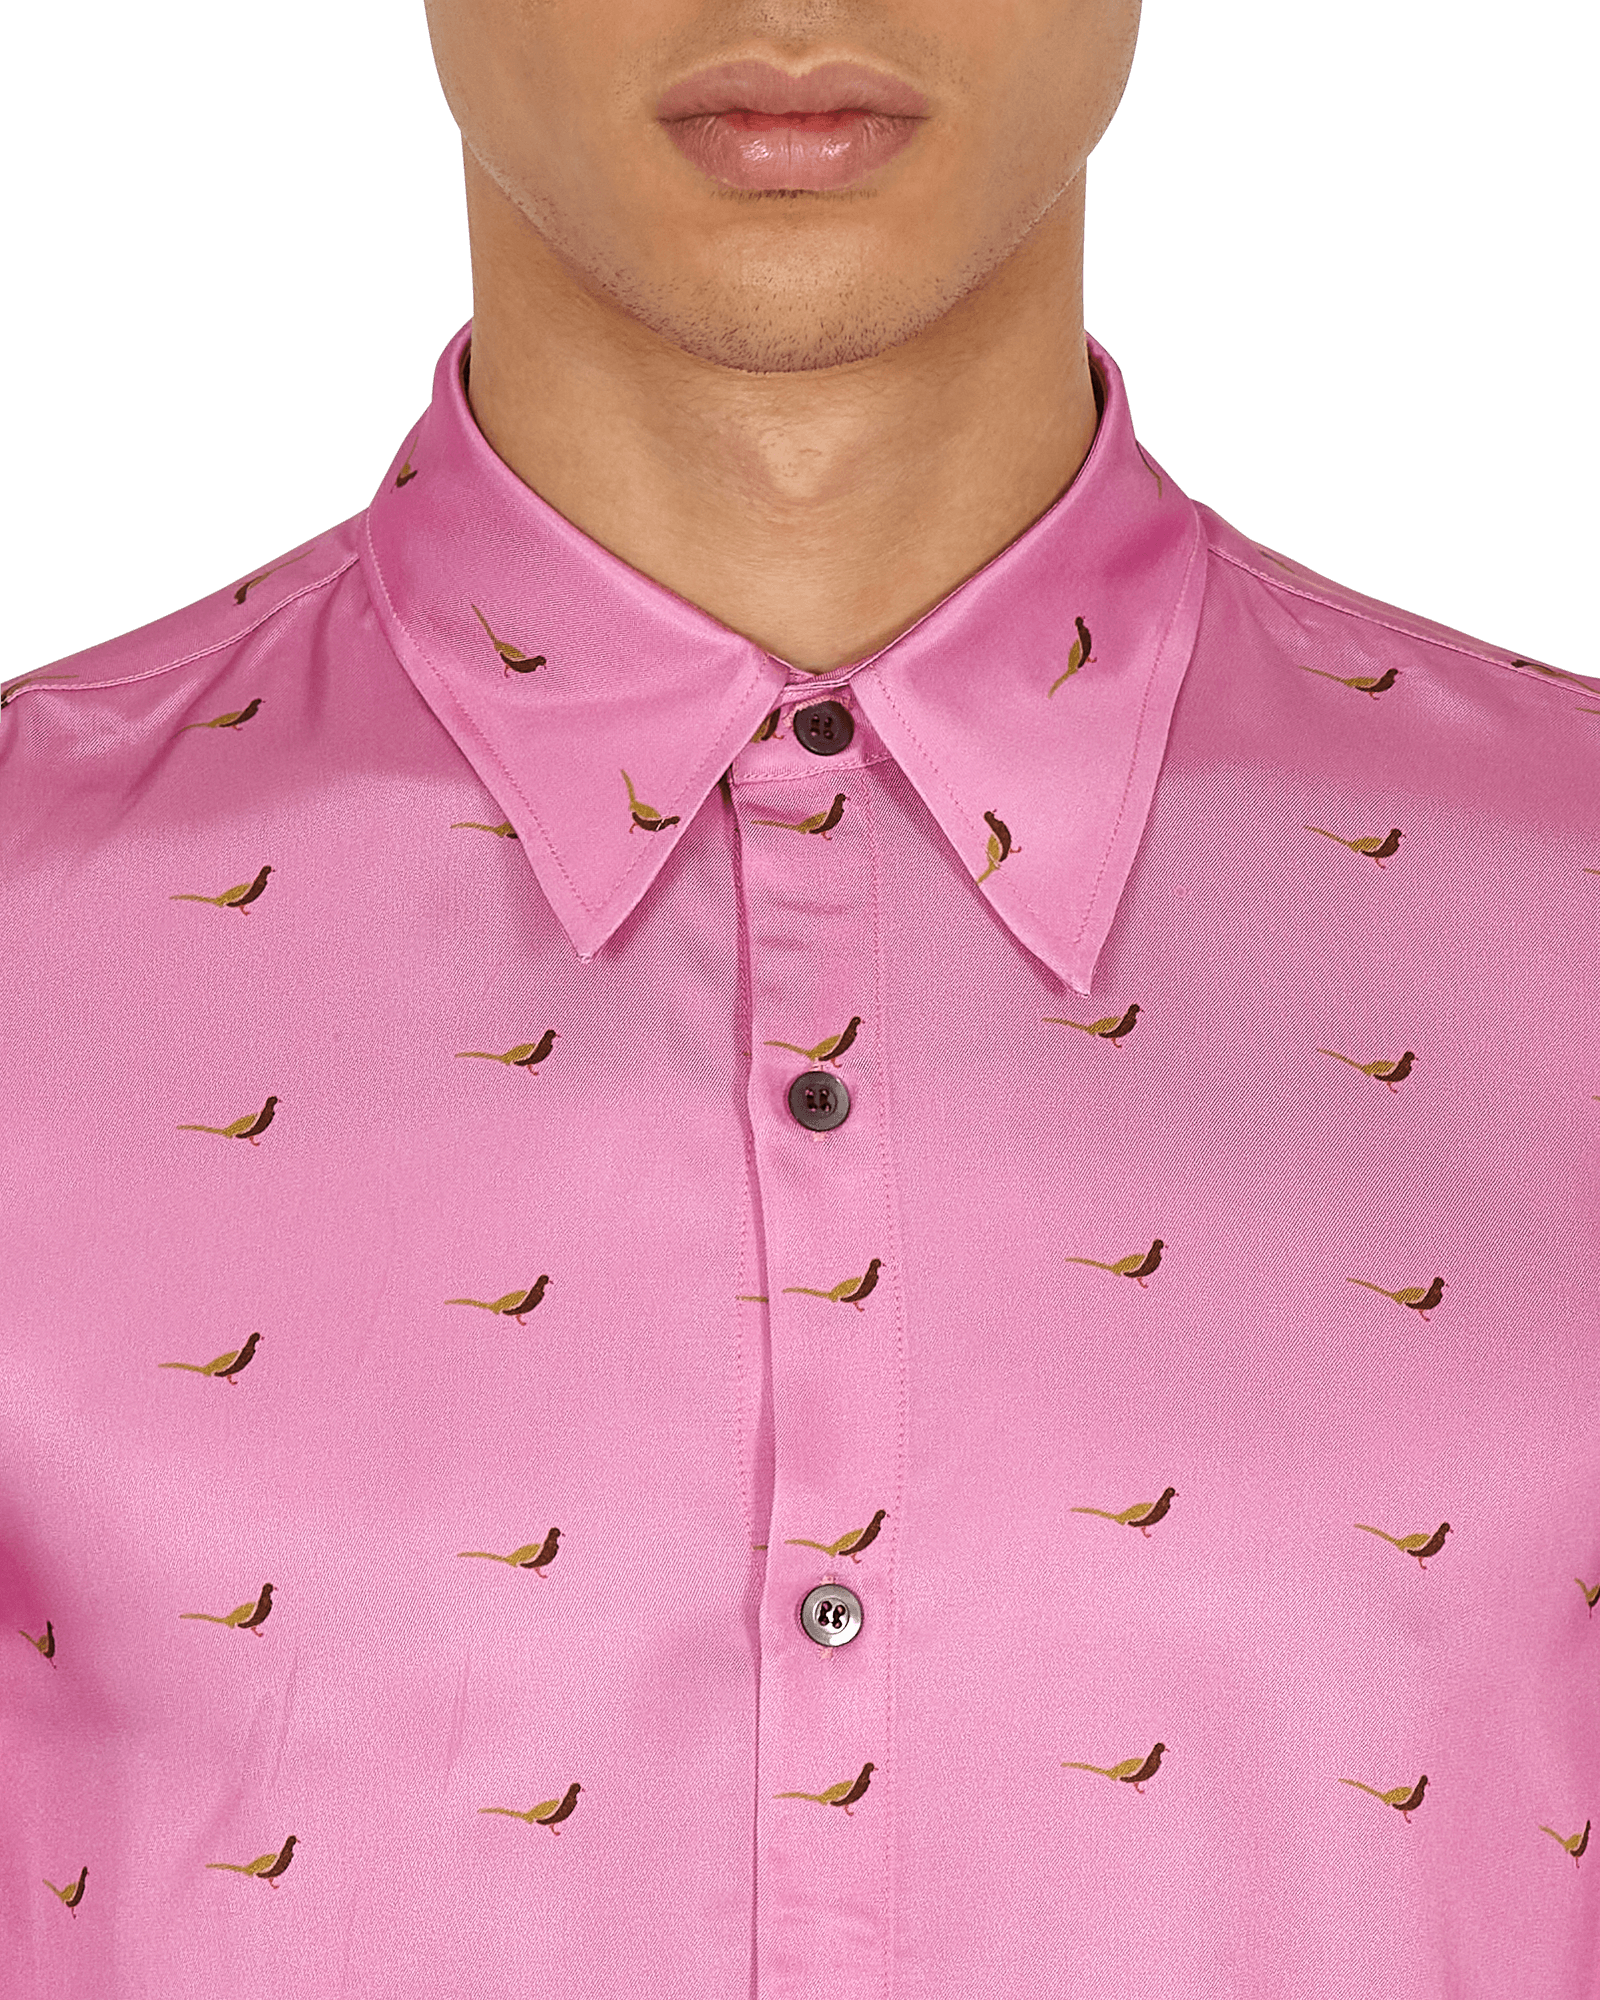 Dries Van Noten Chaine 3070 Pink T-Shirts Longsleeve 212-020734-3070 305